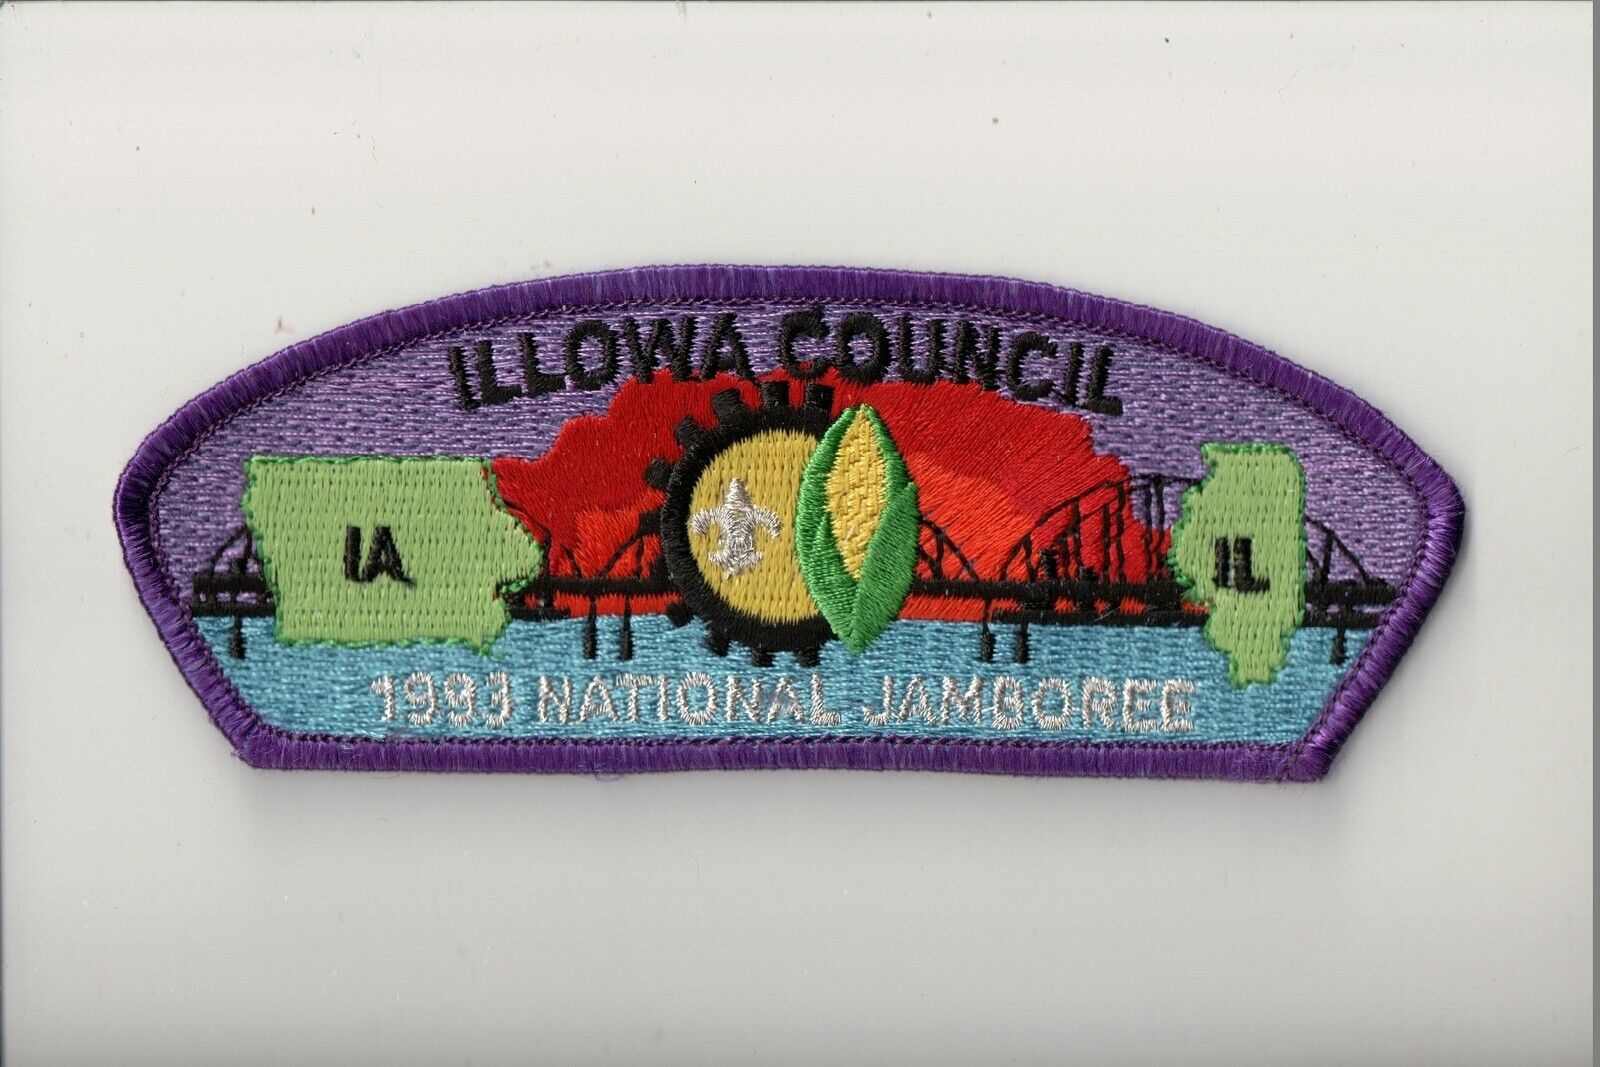 Illowa Council 1993 National Jamboree JSP